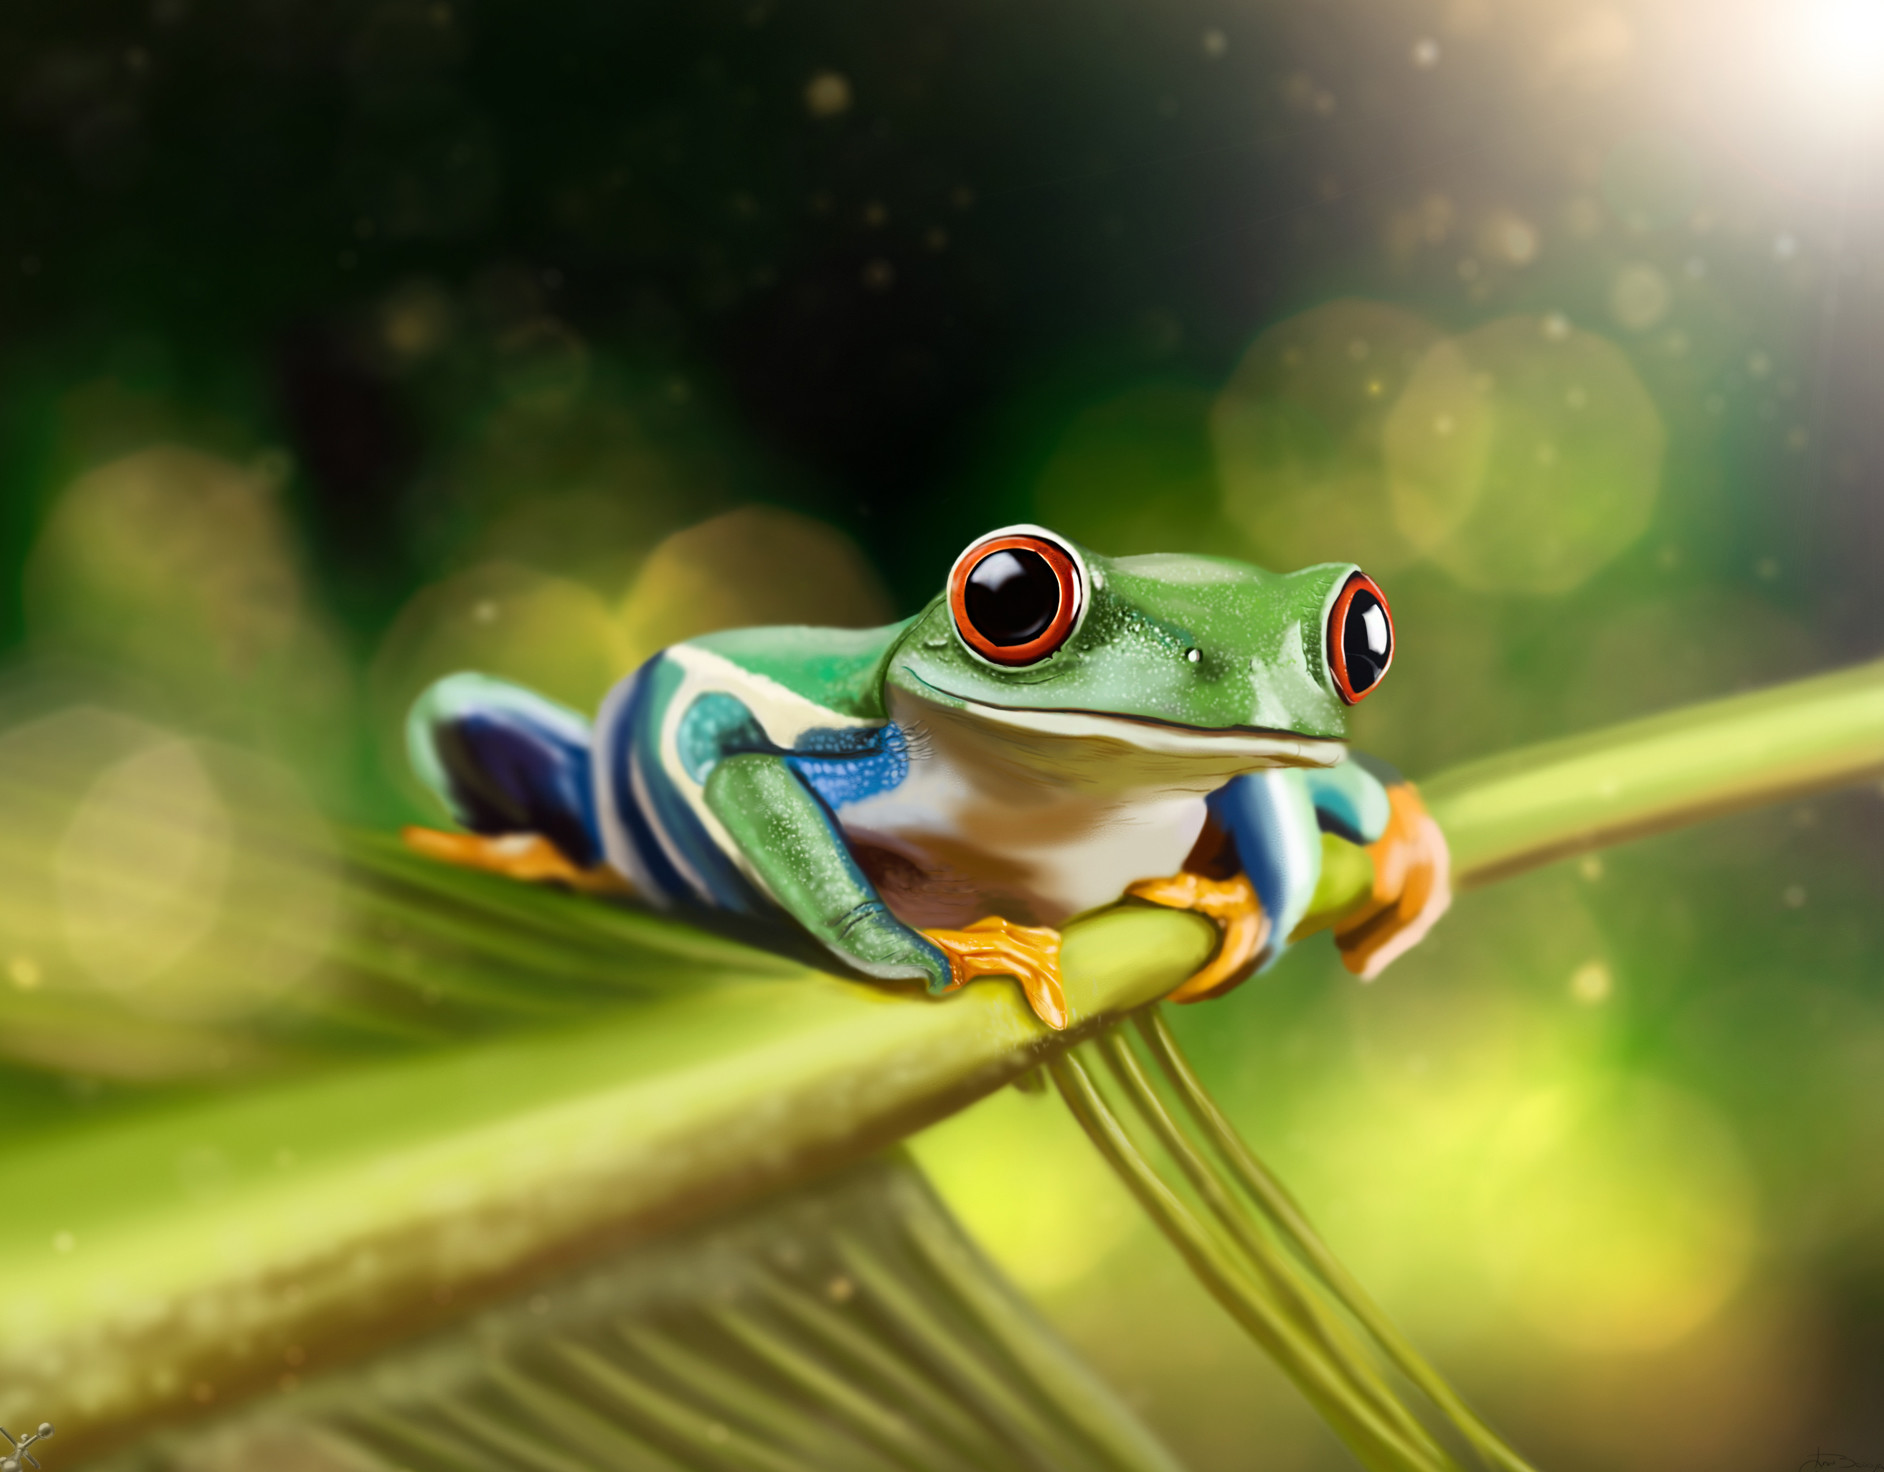 ArtStation - Realistic Frog in Photoshop